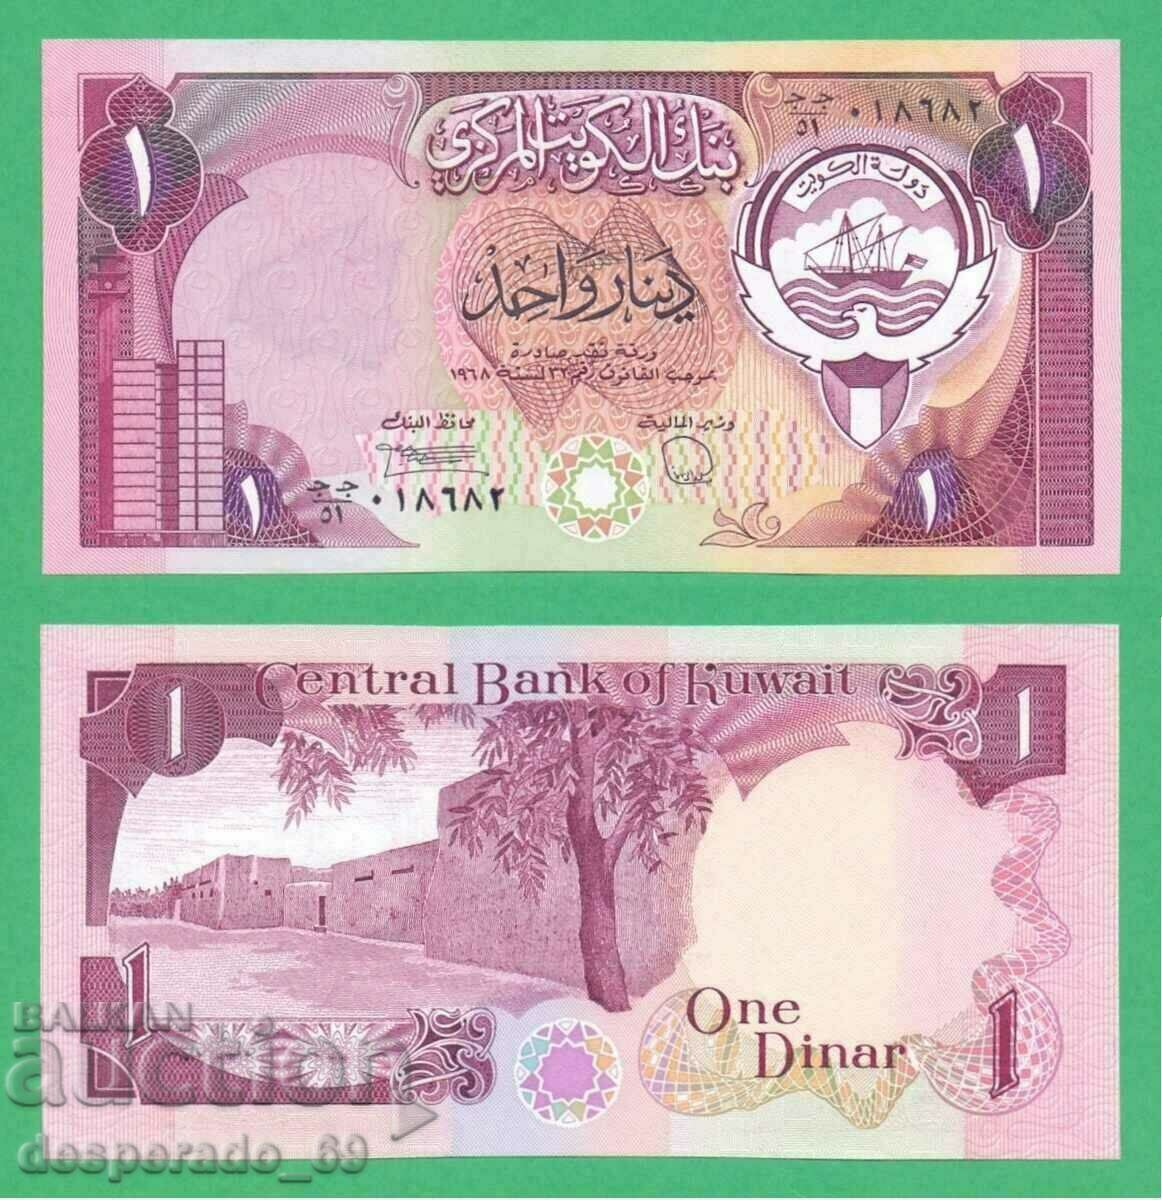 (¯`'•.¸ KUWAIT 1 dinar 1991 UNC ¸.•'´¯)